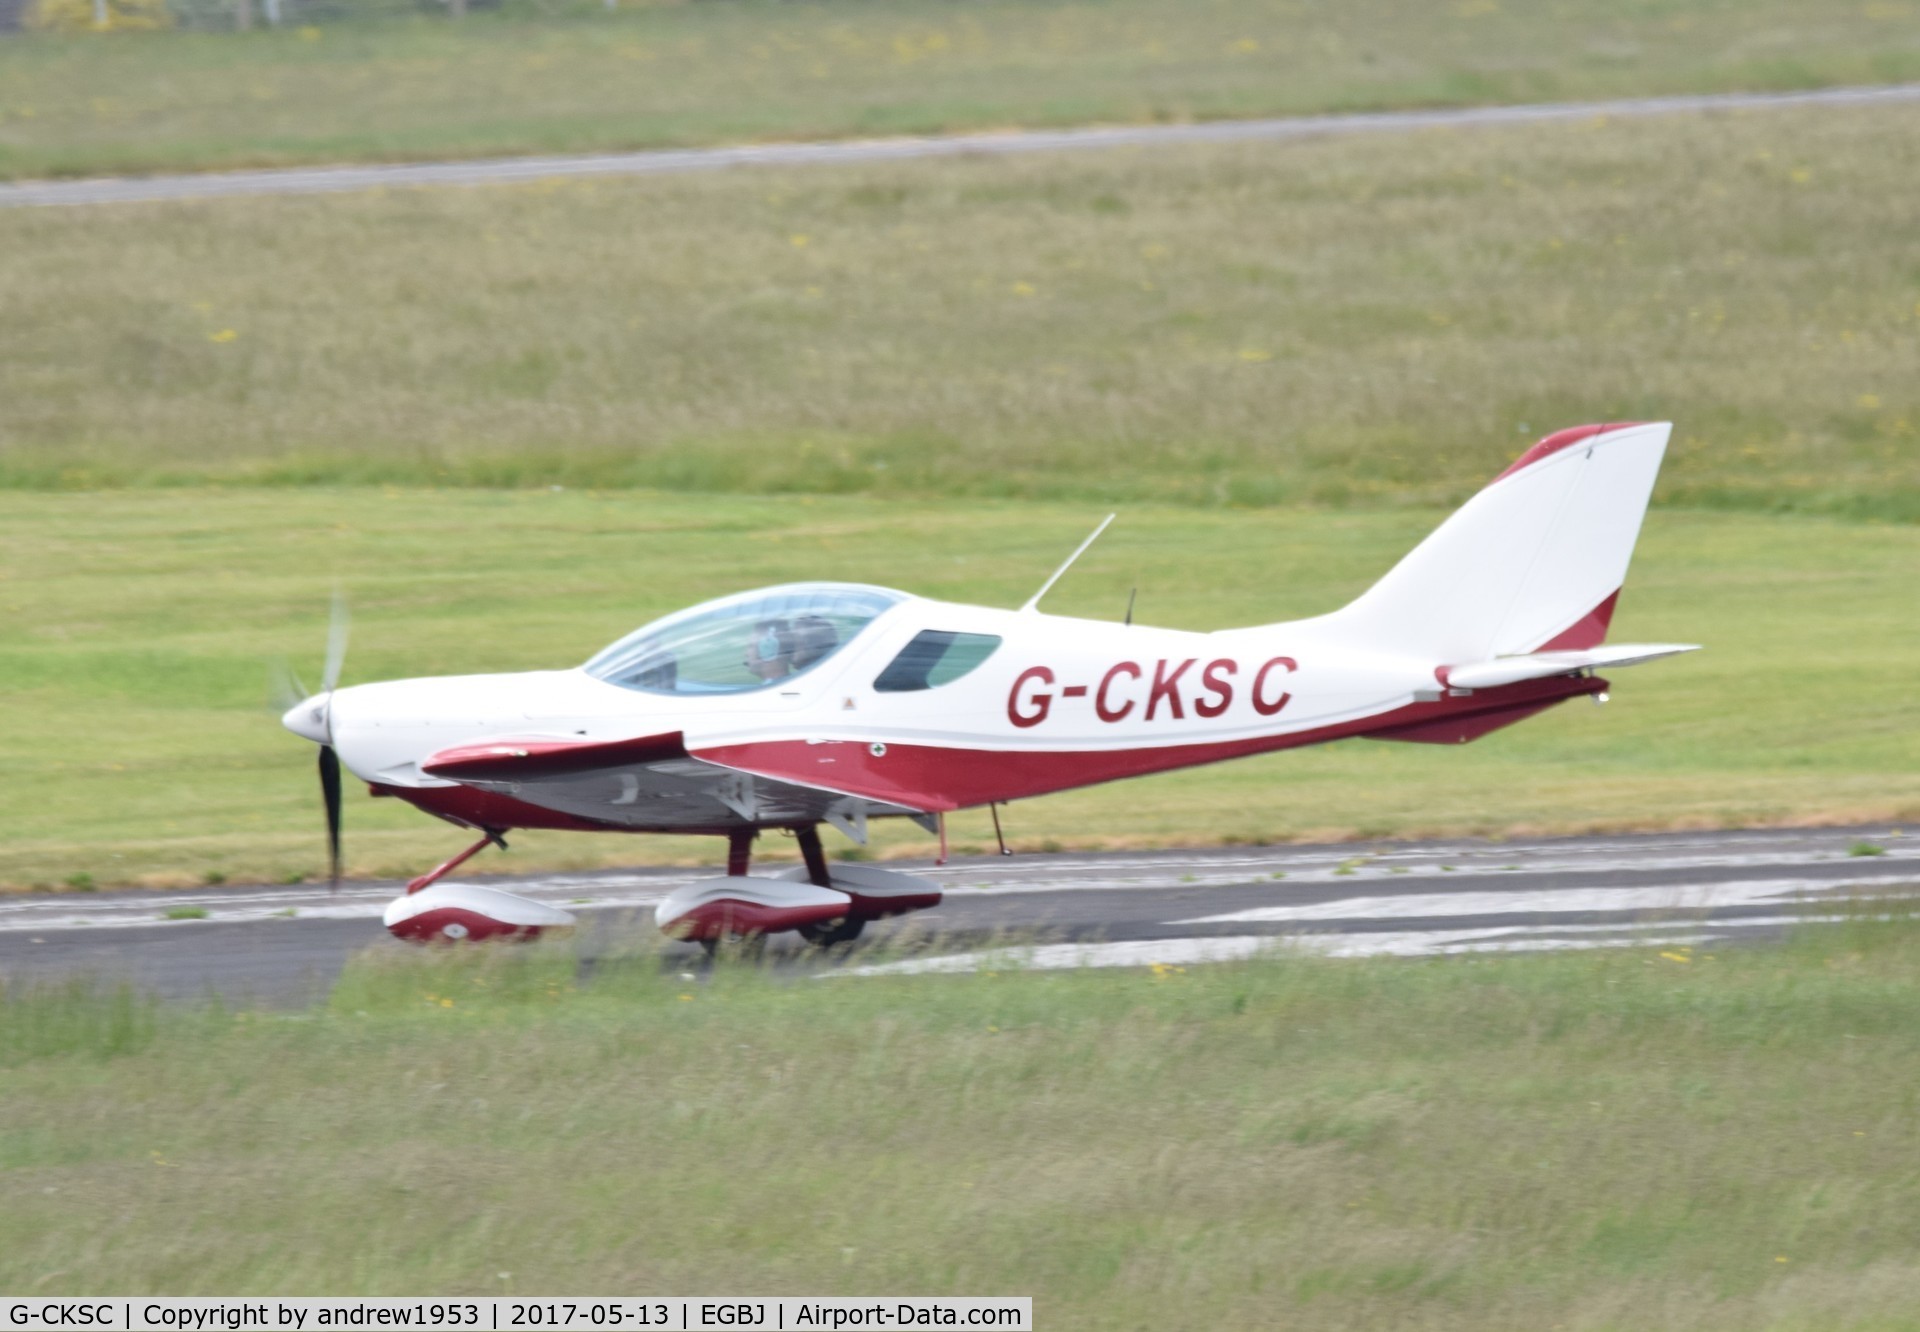 G-CKSC, 2010 CZAW SportCruiser C/N 09SC327, G-CKSC at Gloucestershire Airport.